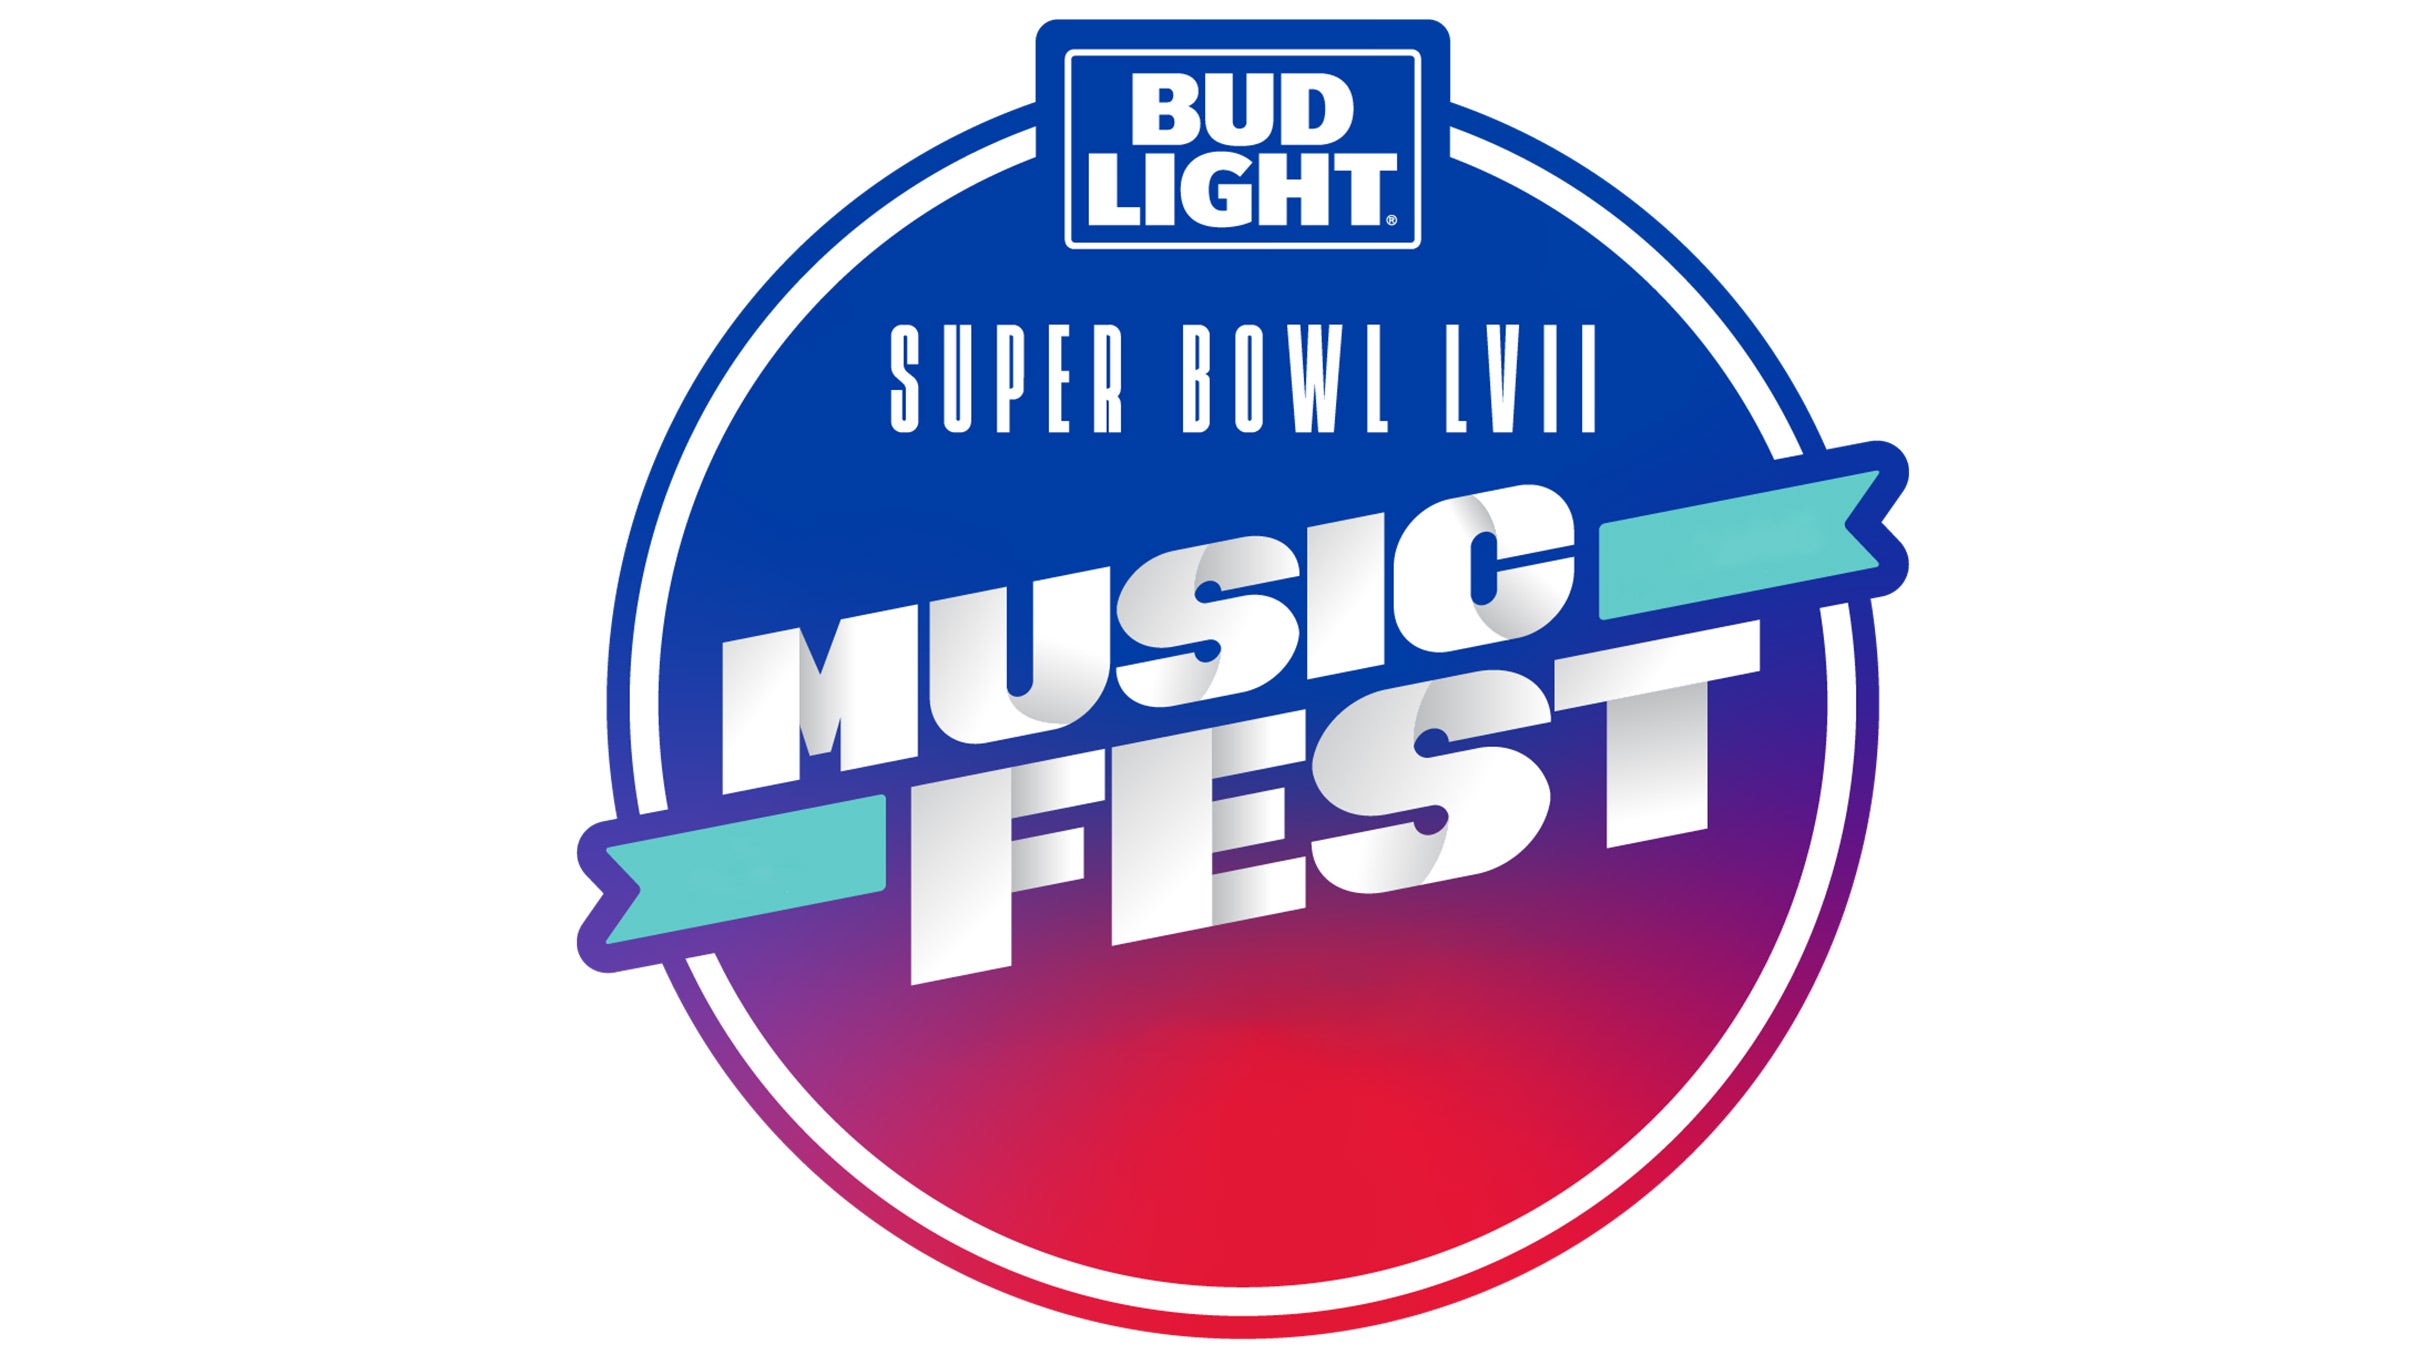 Bud Light Super Bowl Music Fest - Imagine Dragons and Kane Brown free presale code